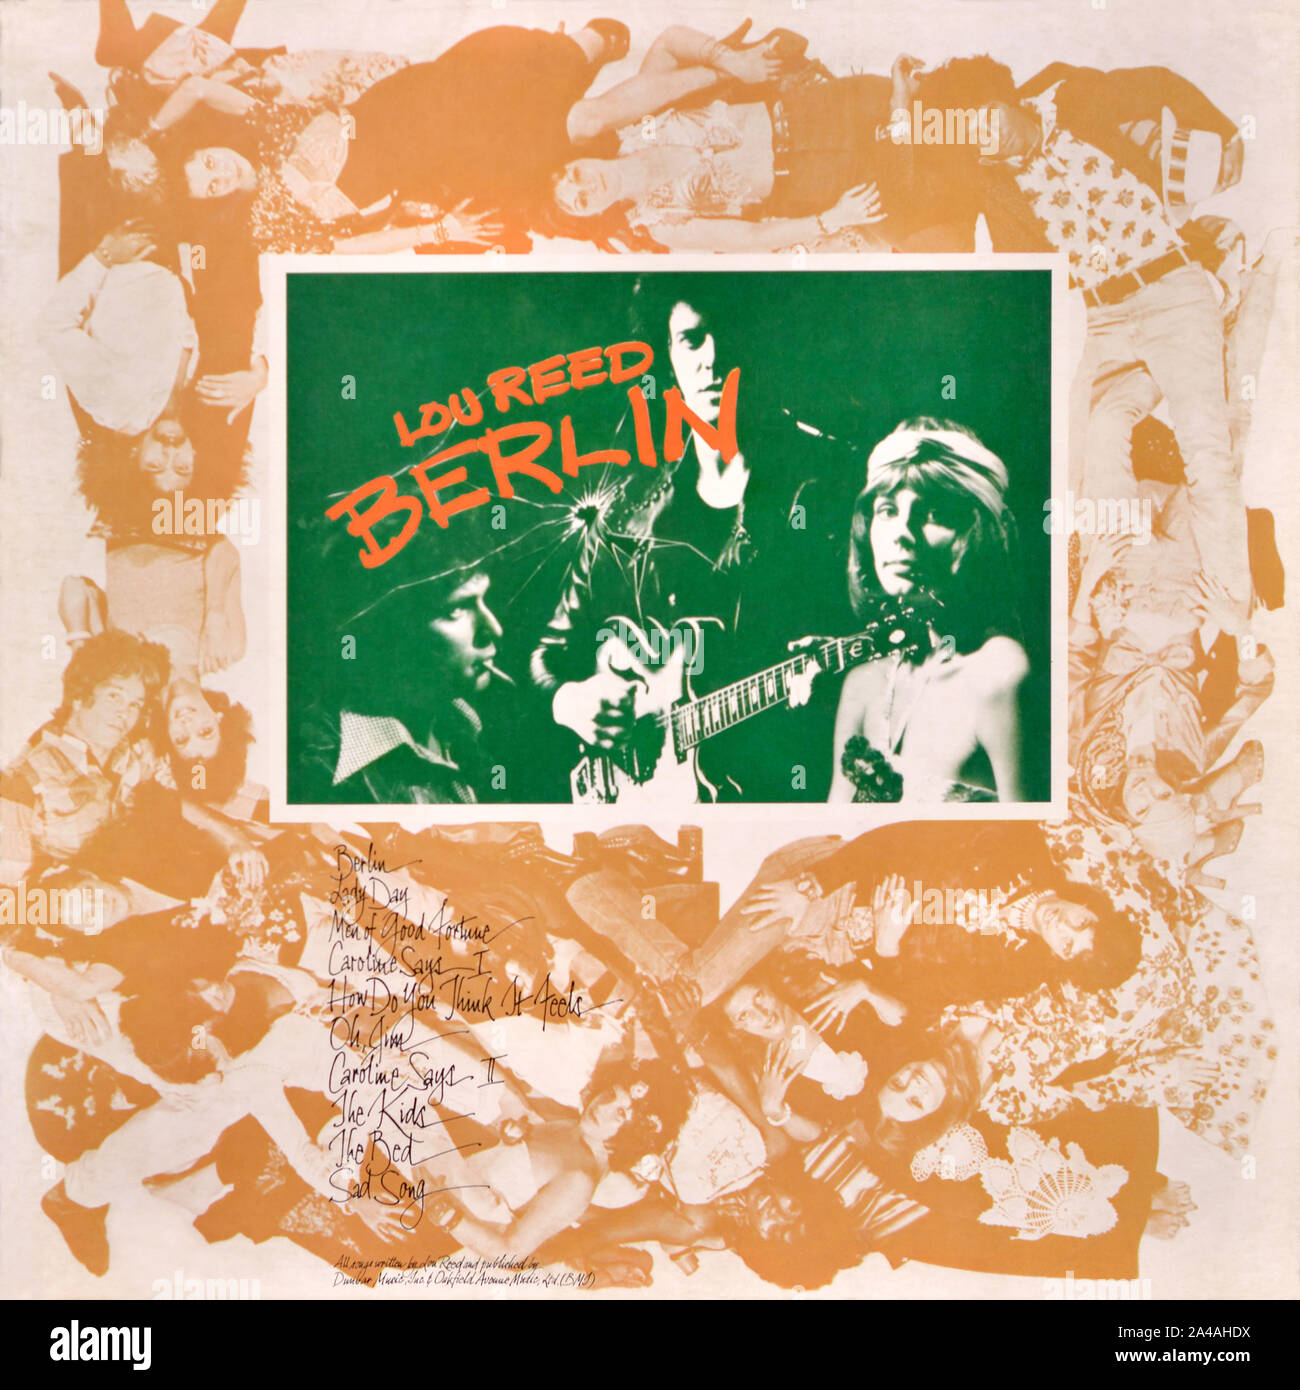 Lou Reed - original vinyl album cover - Berlin - 1973 Stock Photo